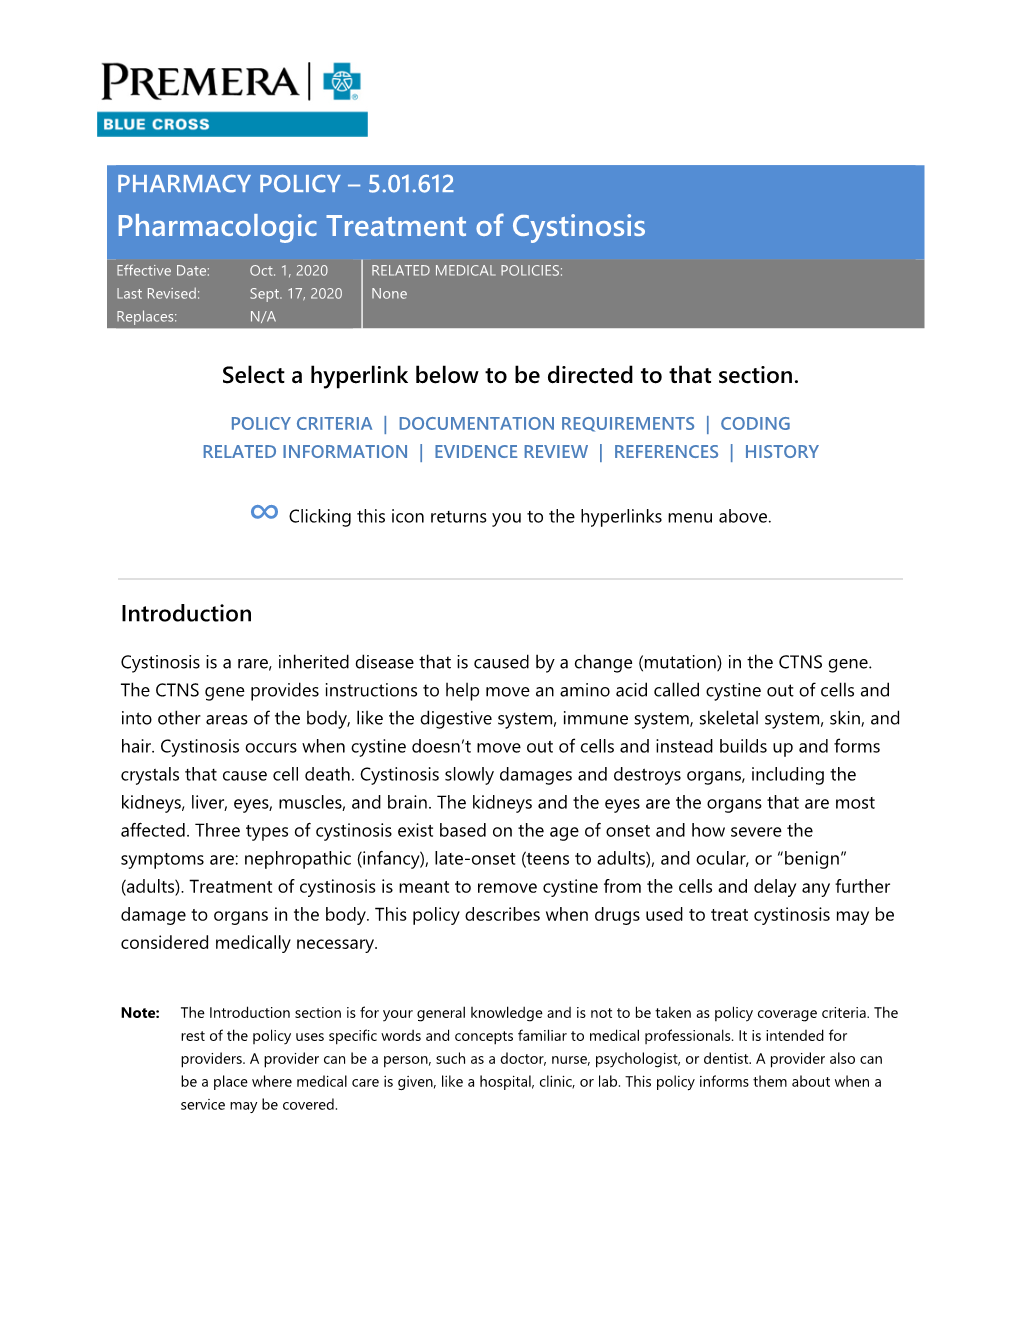 5.01.612 Pharmacologic Treatment of Cystinosis